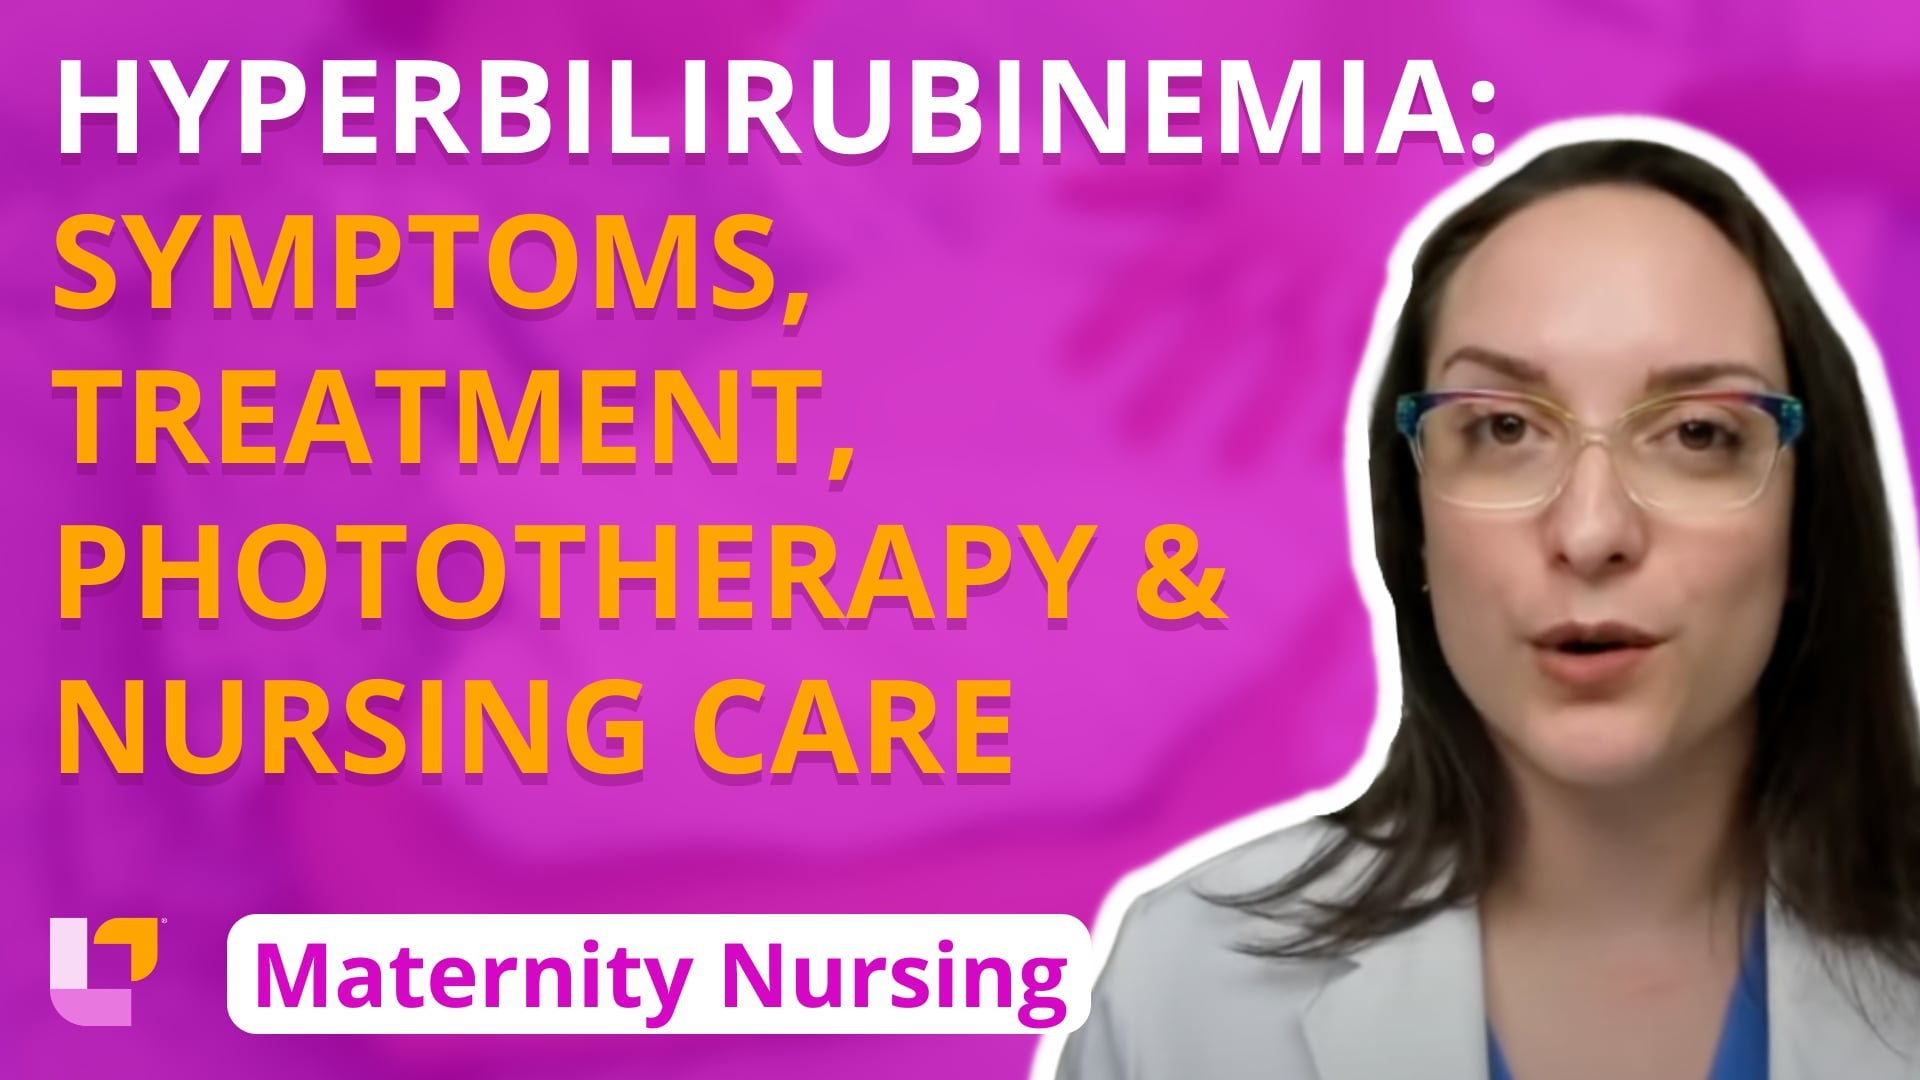 Maternity - Newborn, part 5: Hyperbilirubinemia - Symptoms, Treatment, Phototherapy, and Nursing Care - LevelUpRN